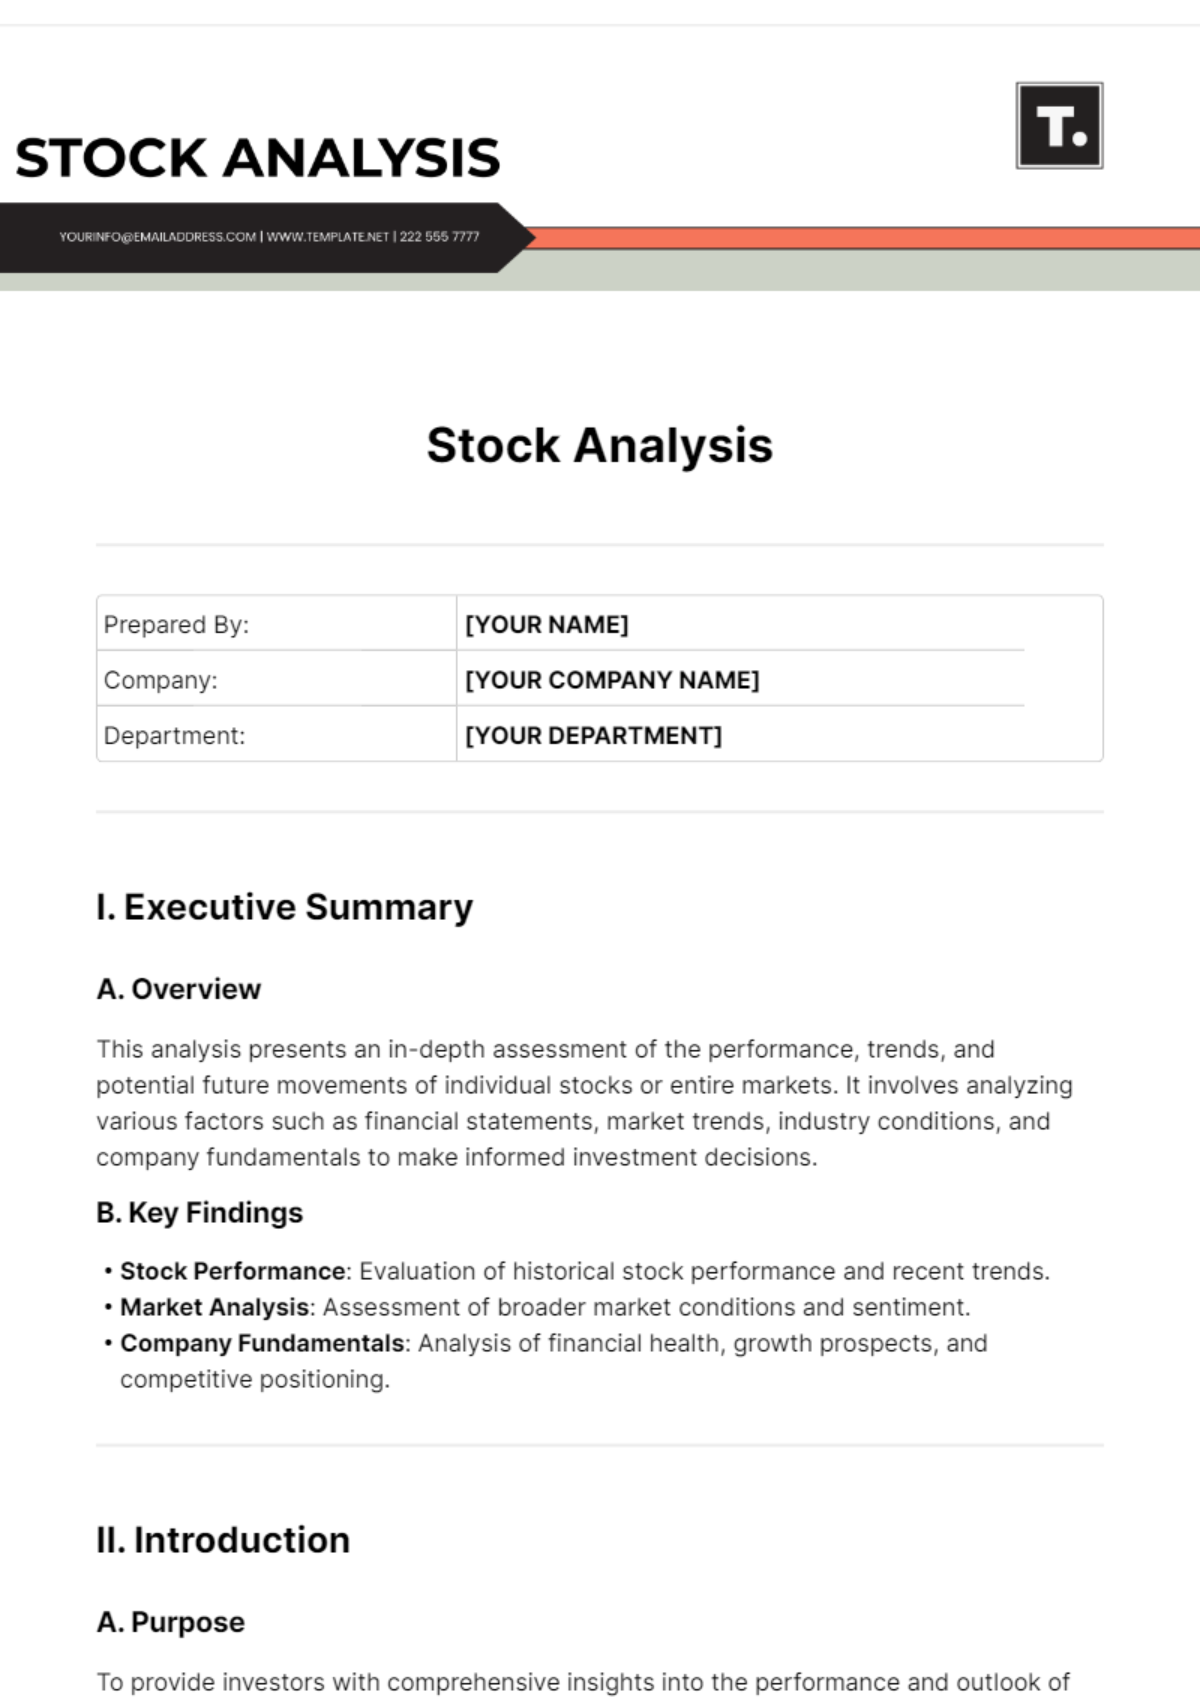 Stock Analysis Template